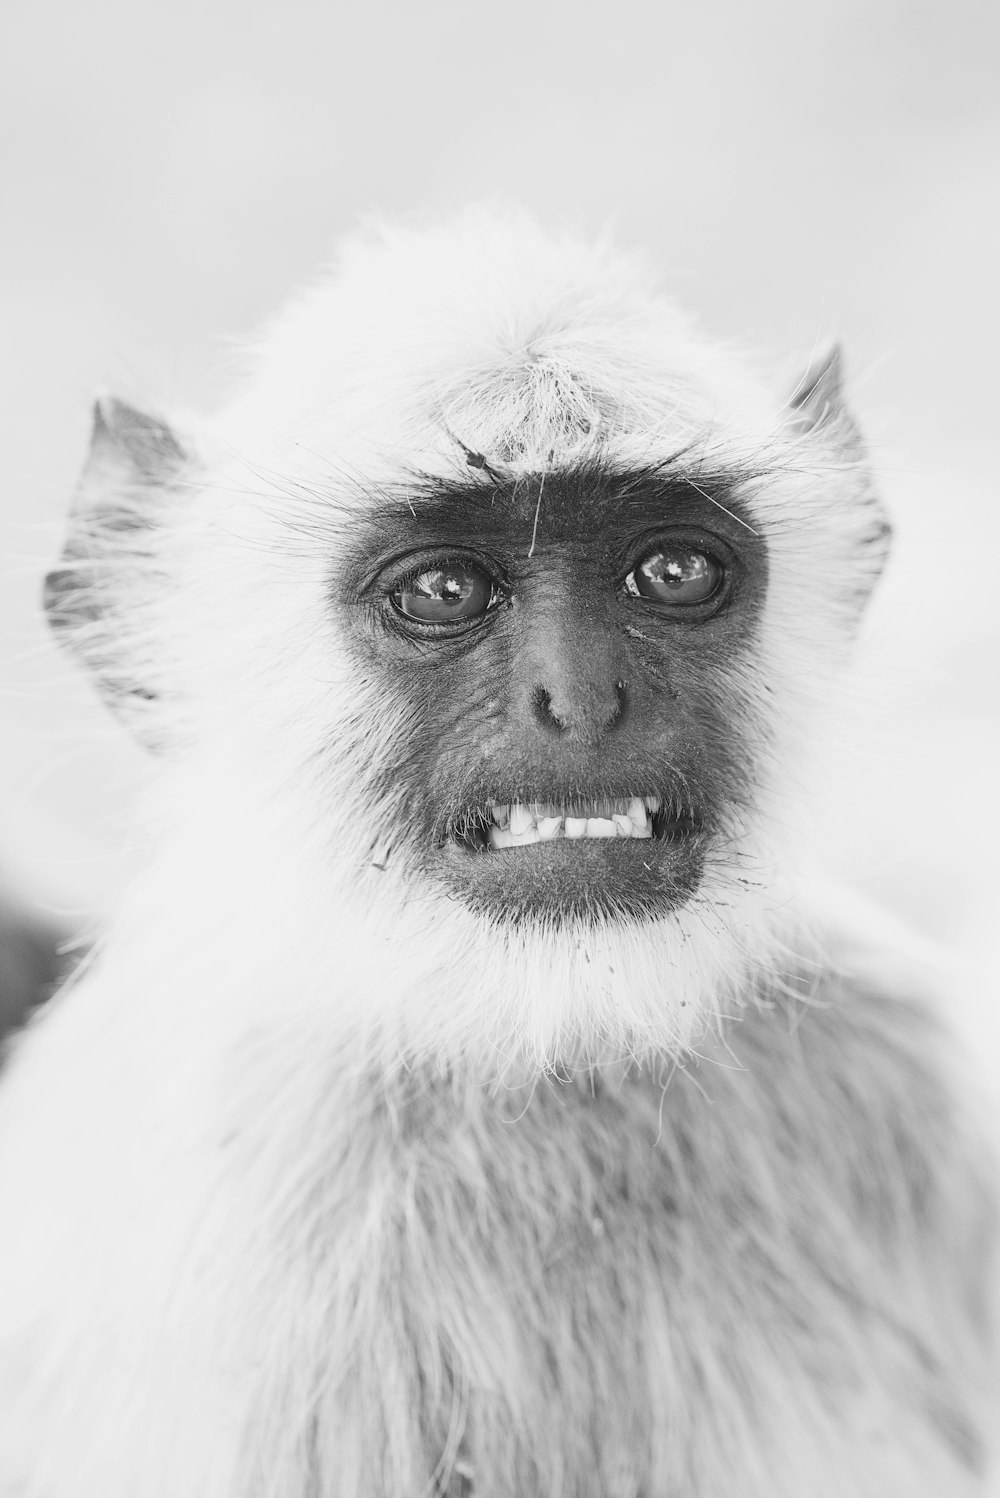 grayscale photo of primate